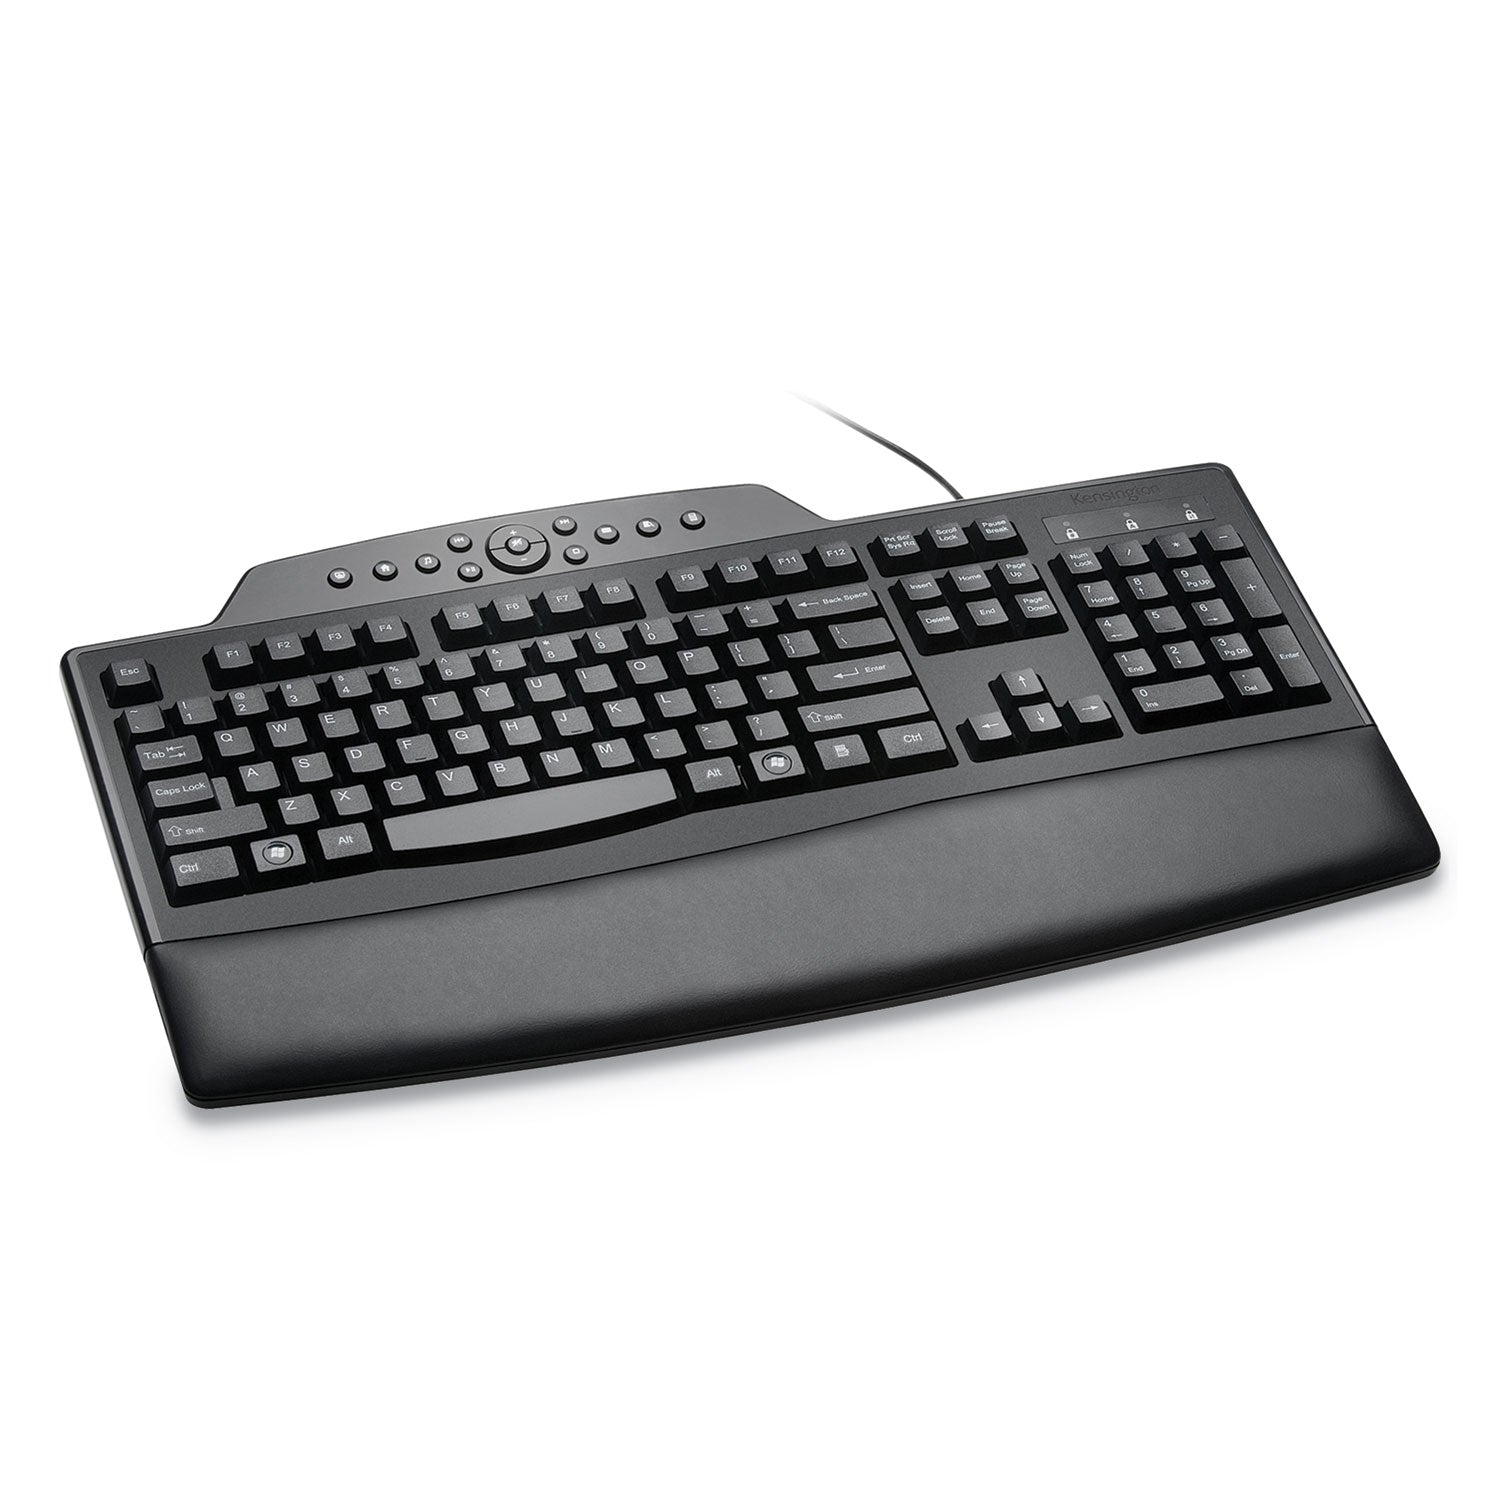 Pro Fit Comfort Keyboard, Internet/Media Keys, Wired, Black - 